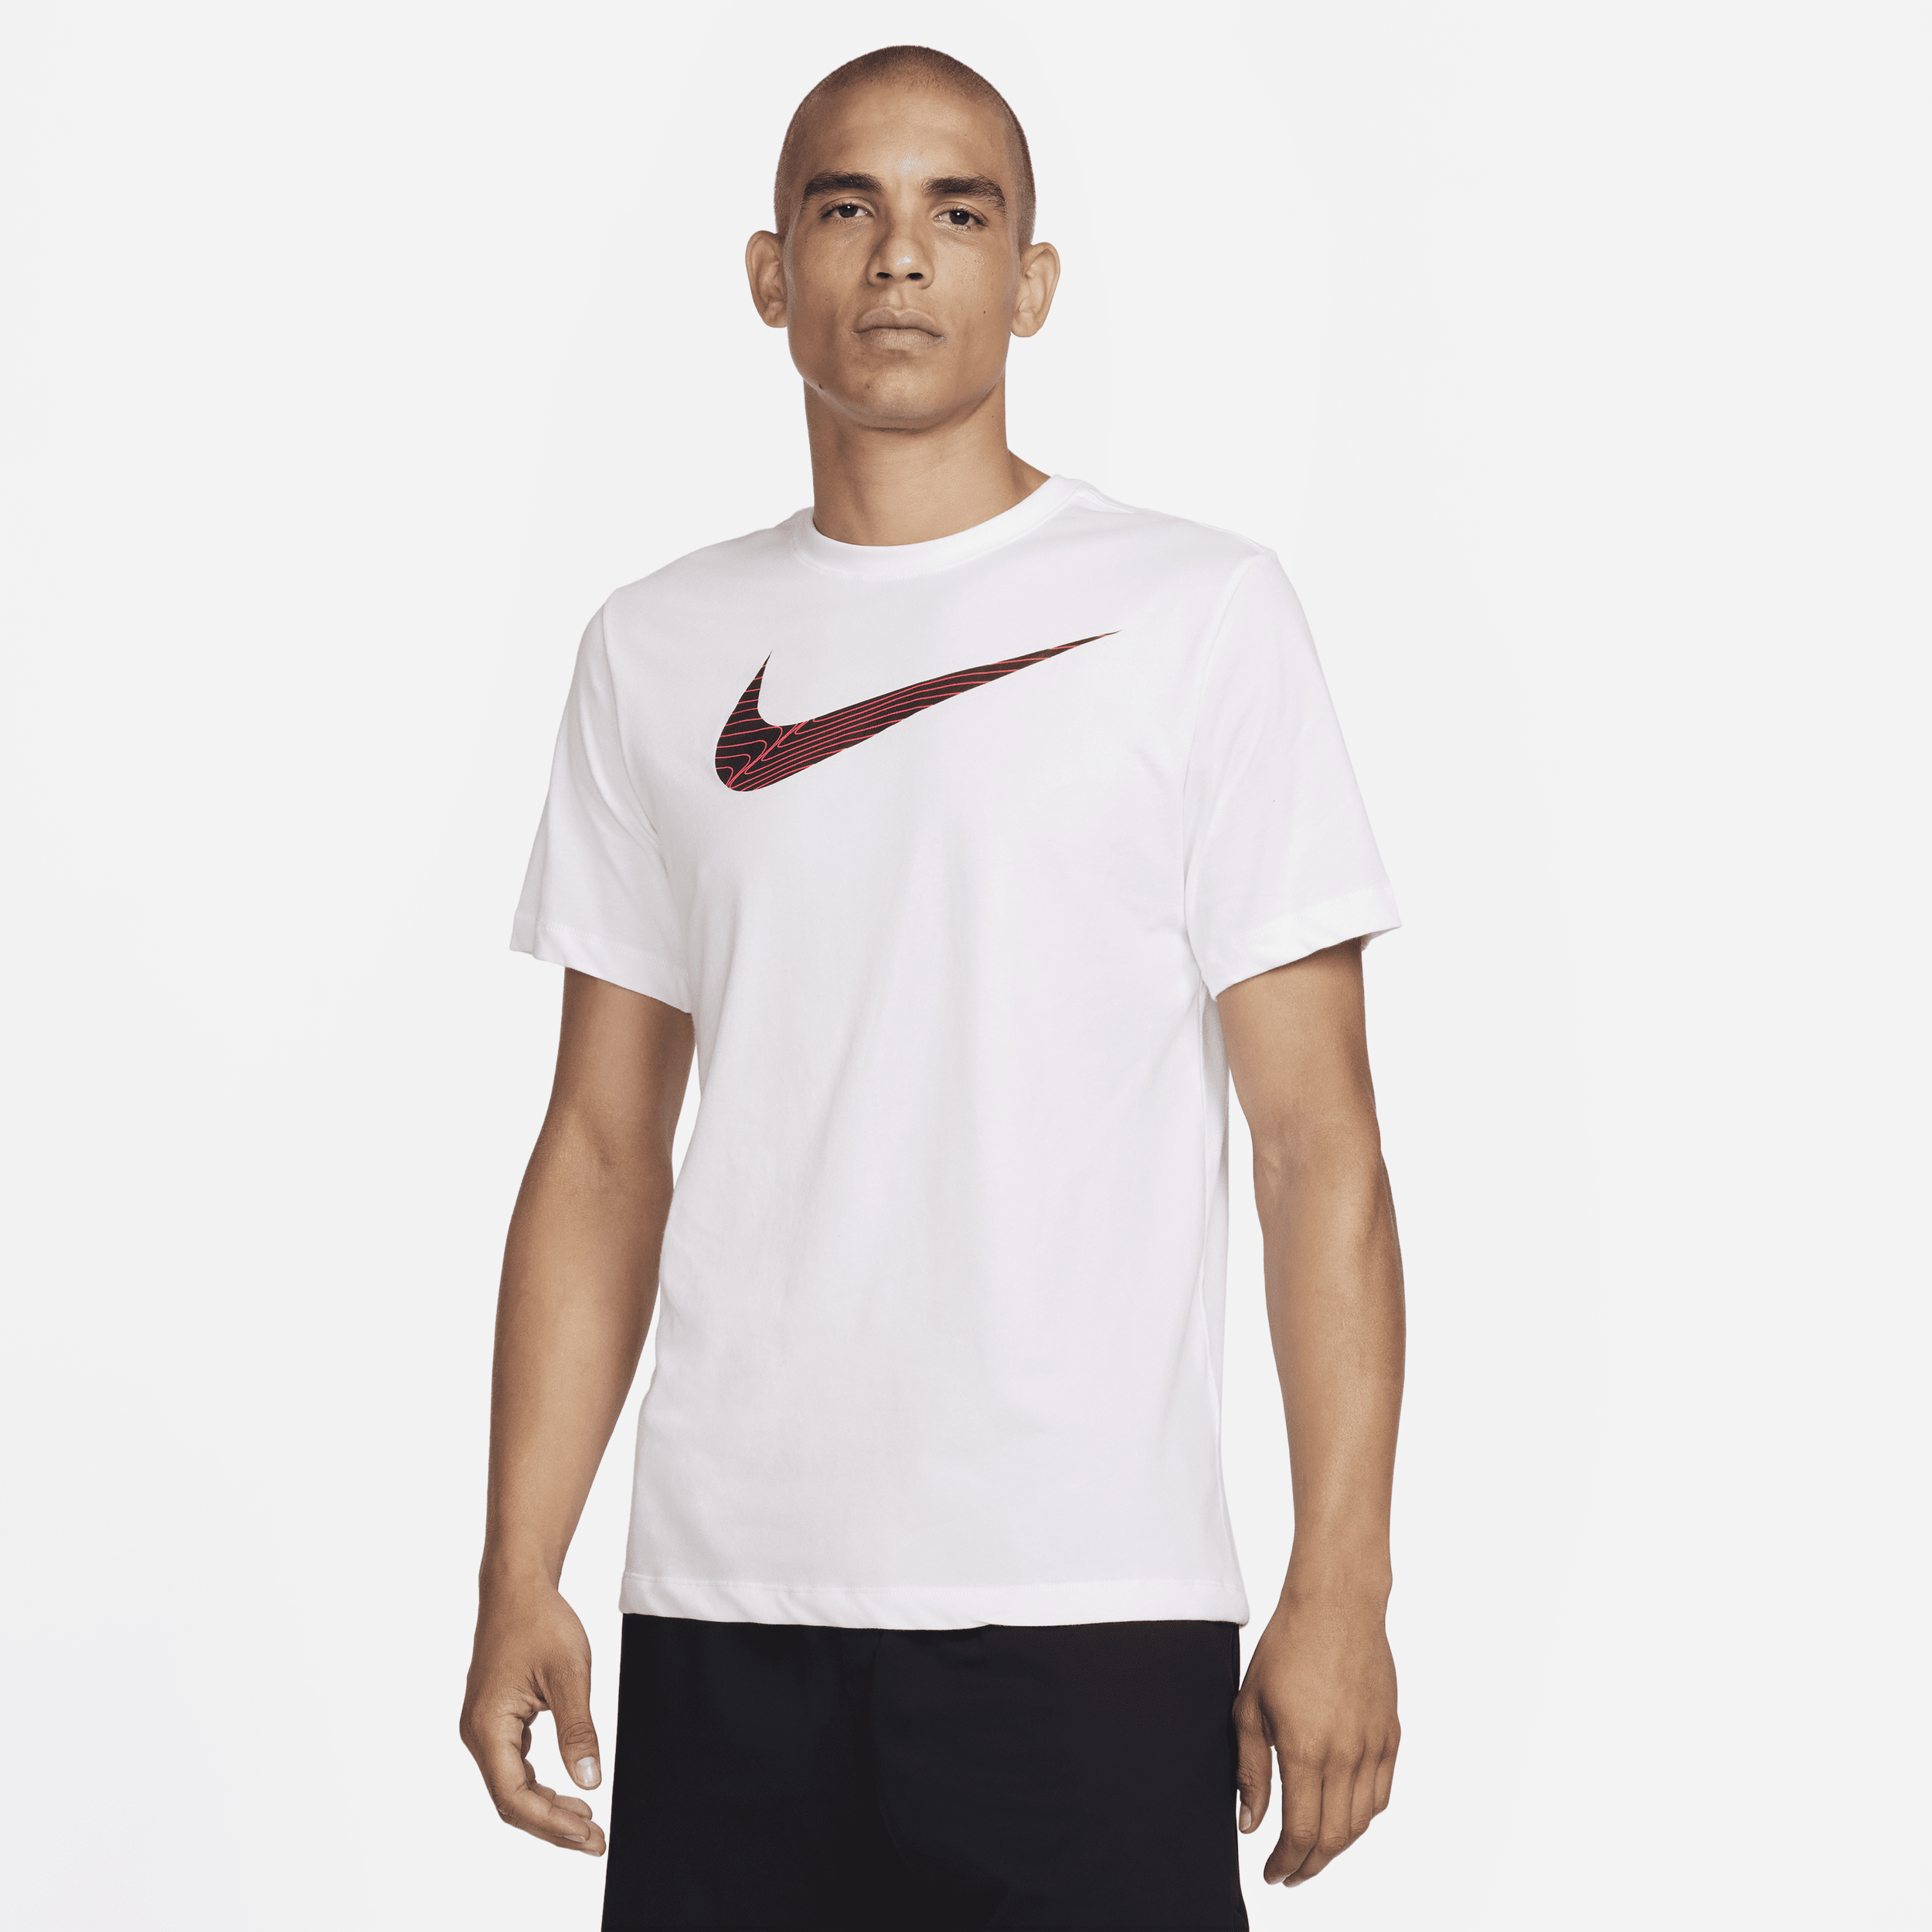 Nike Men's Dri-fit Fitness T-shirt In White